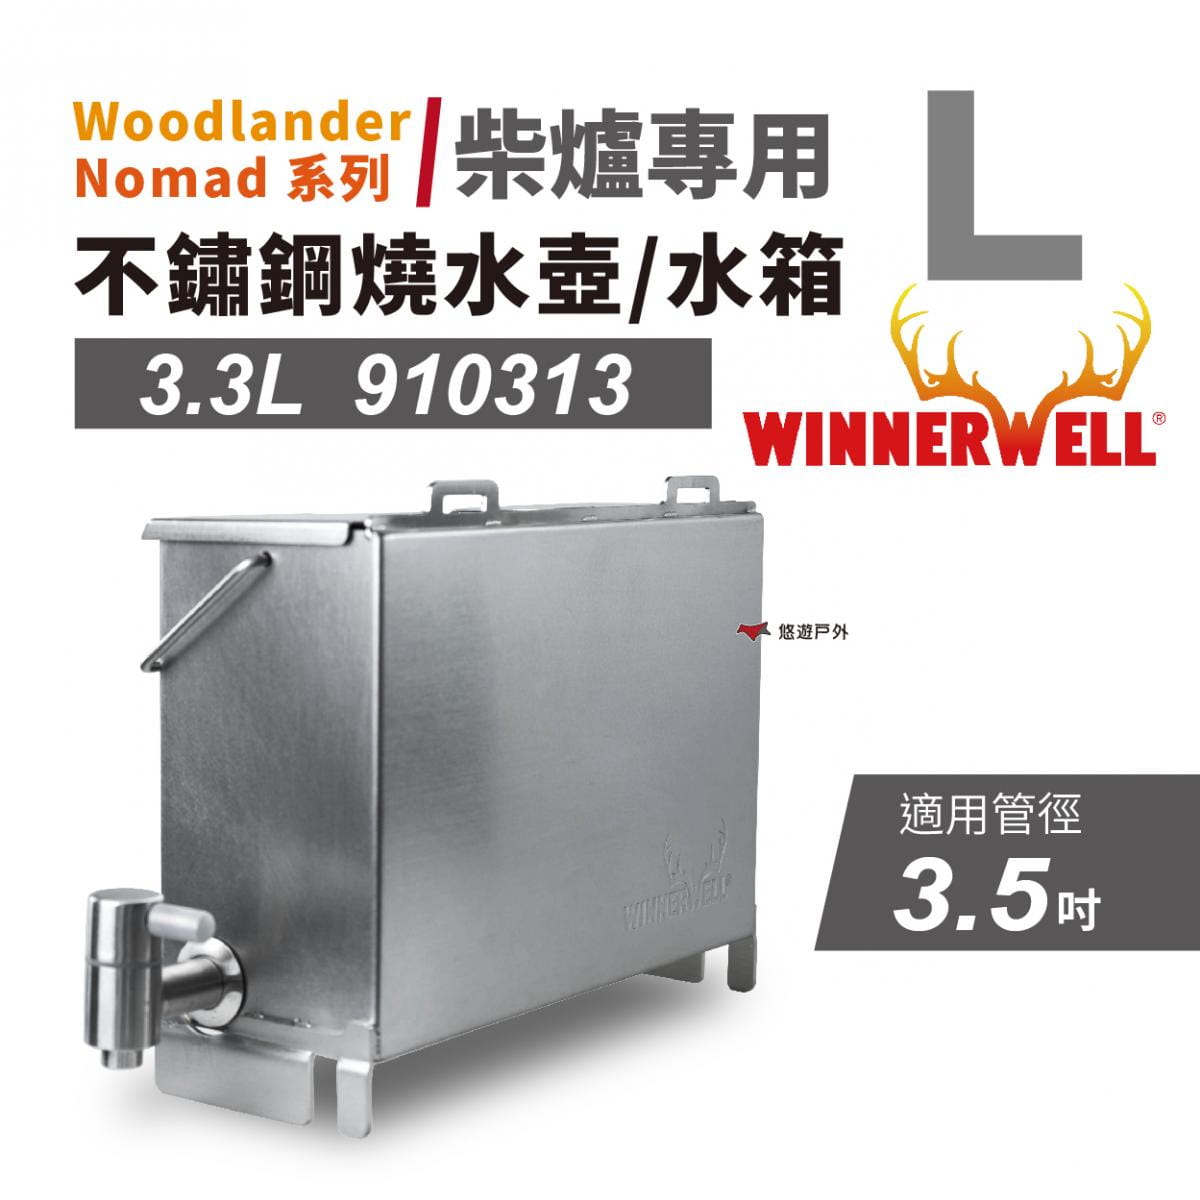 【WINNERWELL】柴爐專用不鏽鋼燒水壺_L號 910313 (悠遊戶外) 0